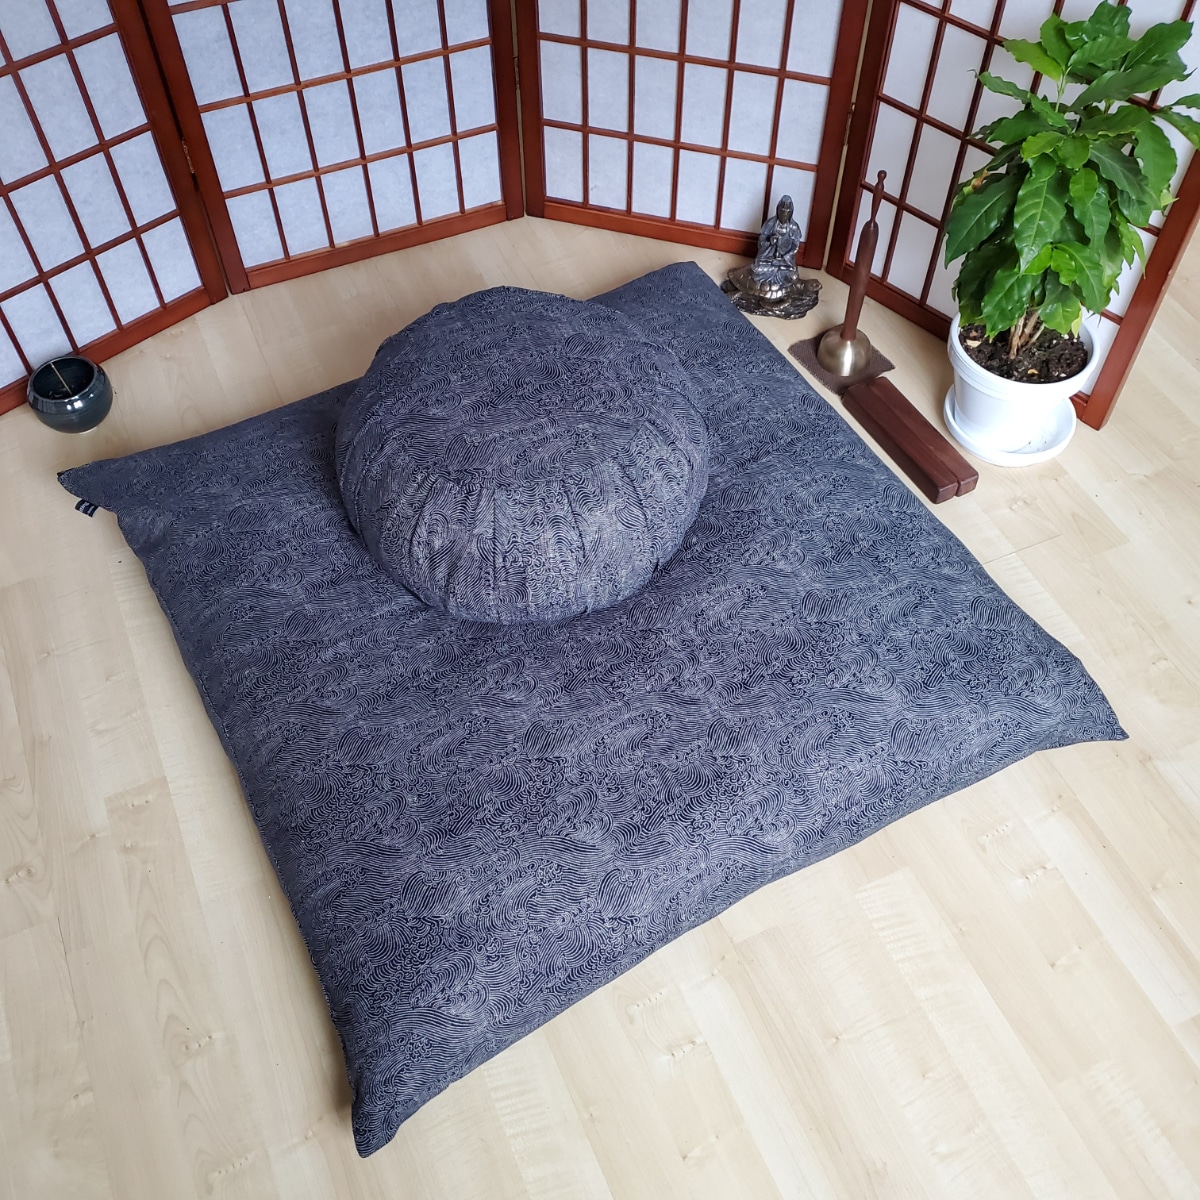 Kyoto Collection Meditation Cushion Sets NEW! - Still Sitting